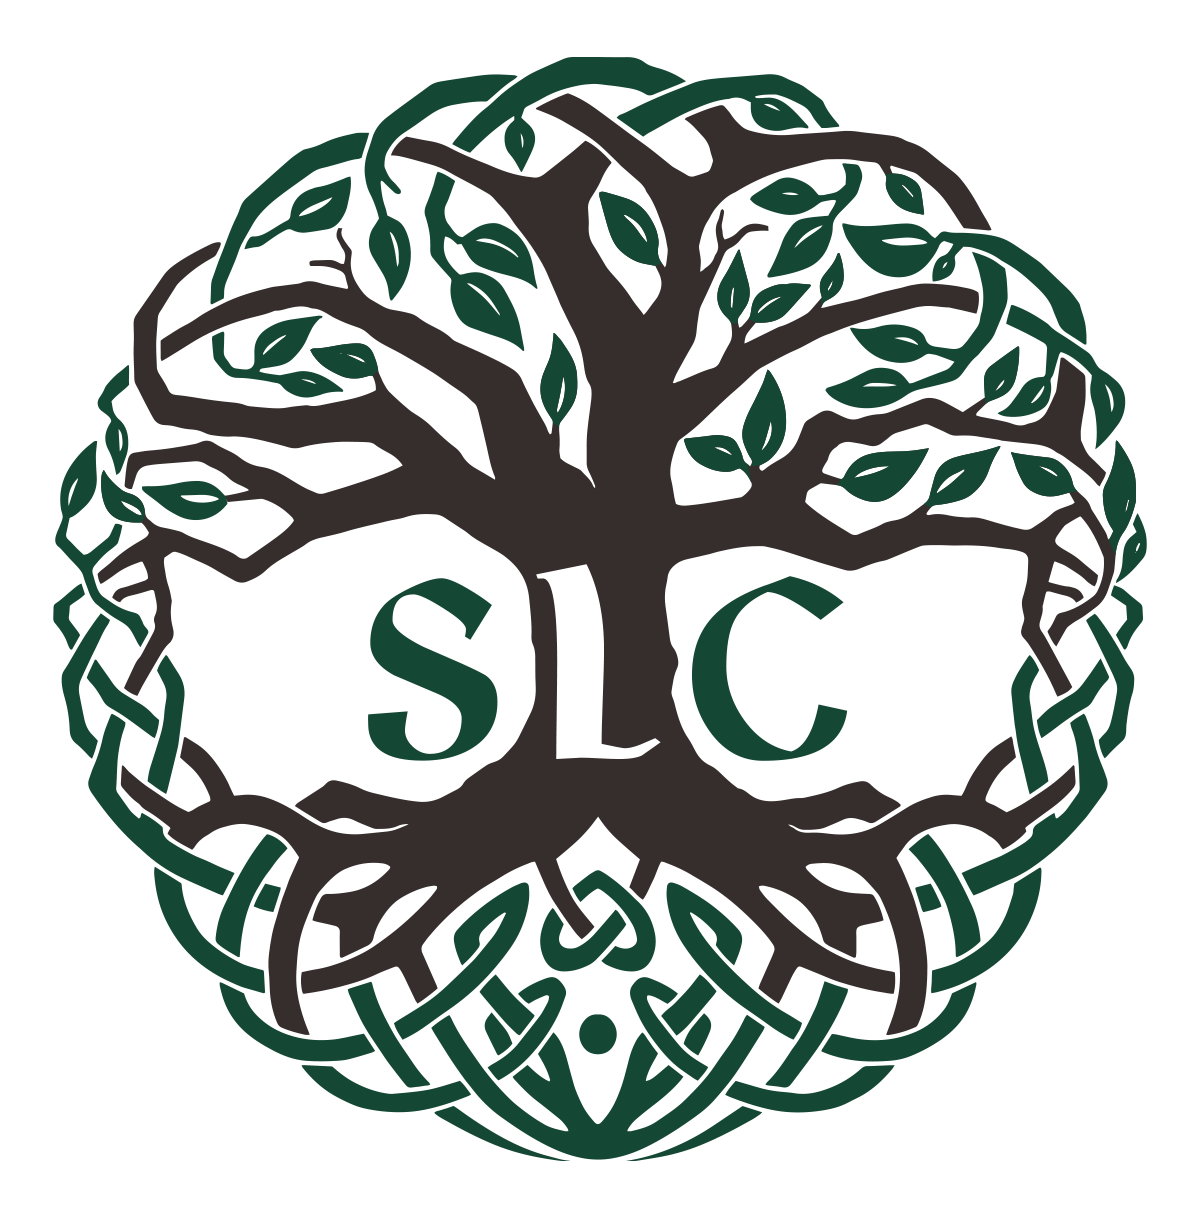 SLC_treeoflifeonly - Sierra Collins